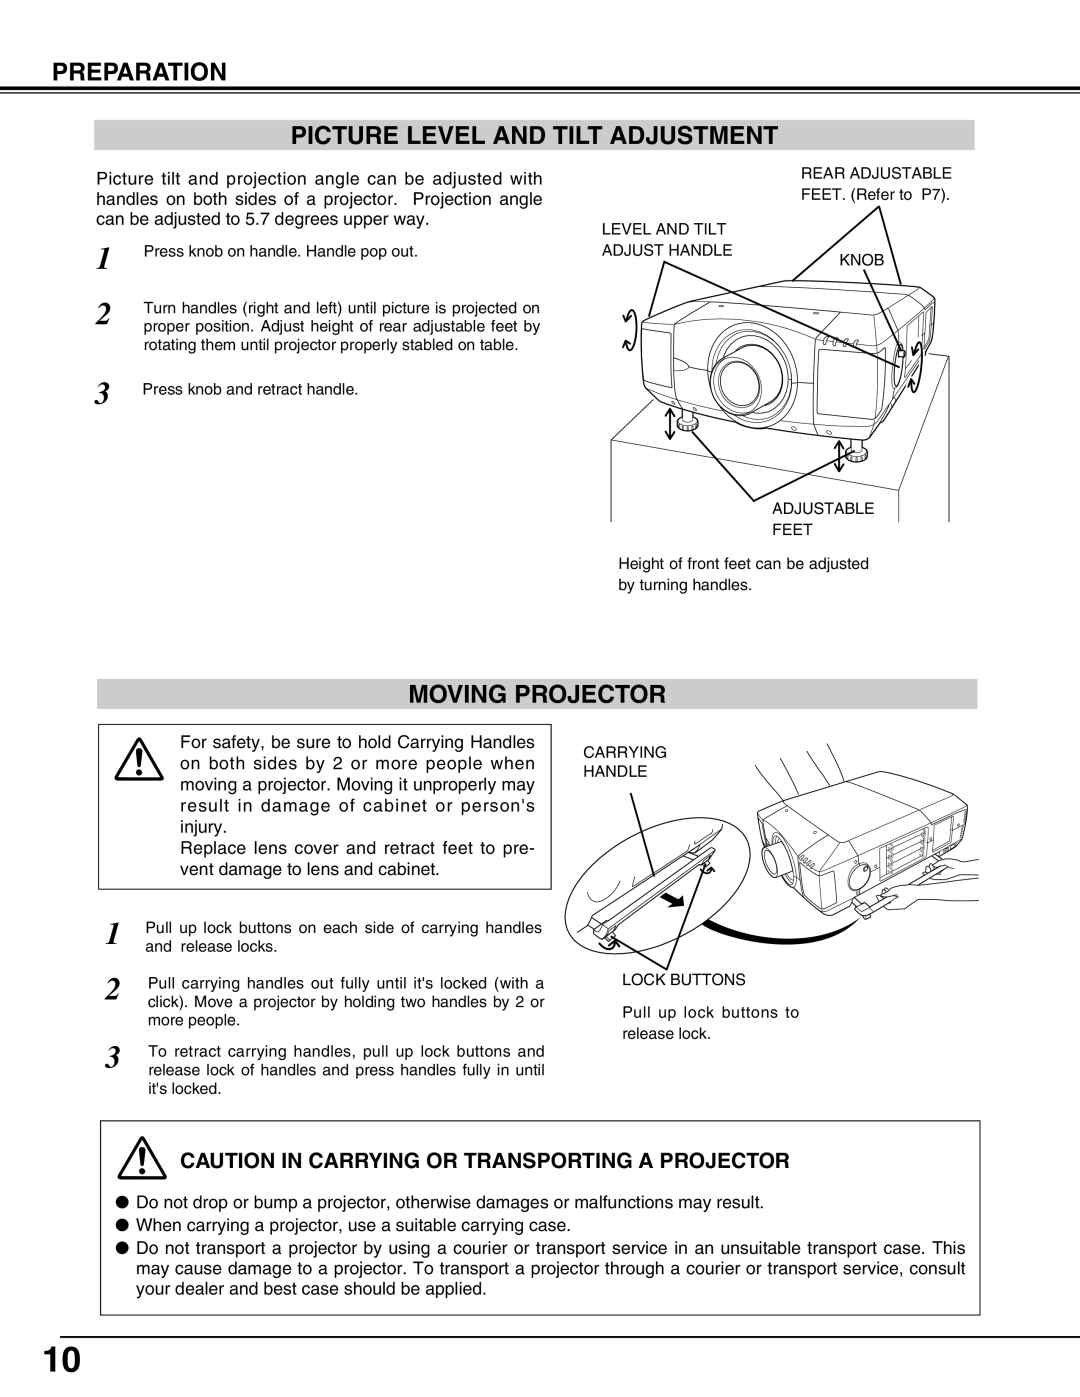 Sanyo PLV-HD150 owner manual Preparation Picture Level And Tilt Adjustment, Moving Projector 